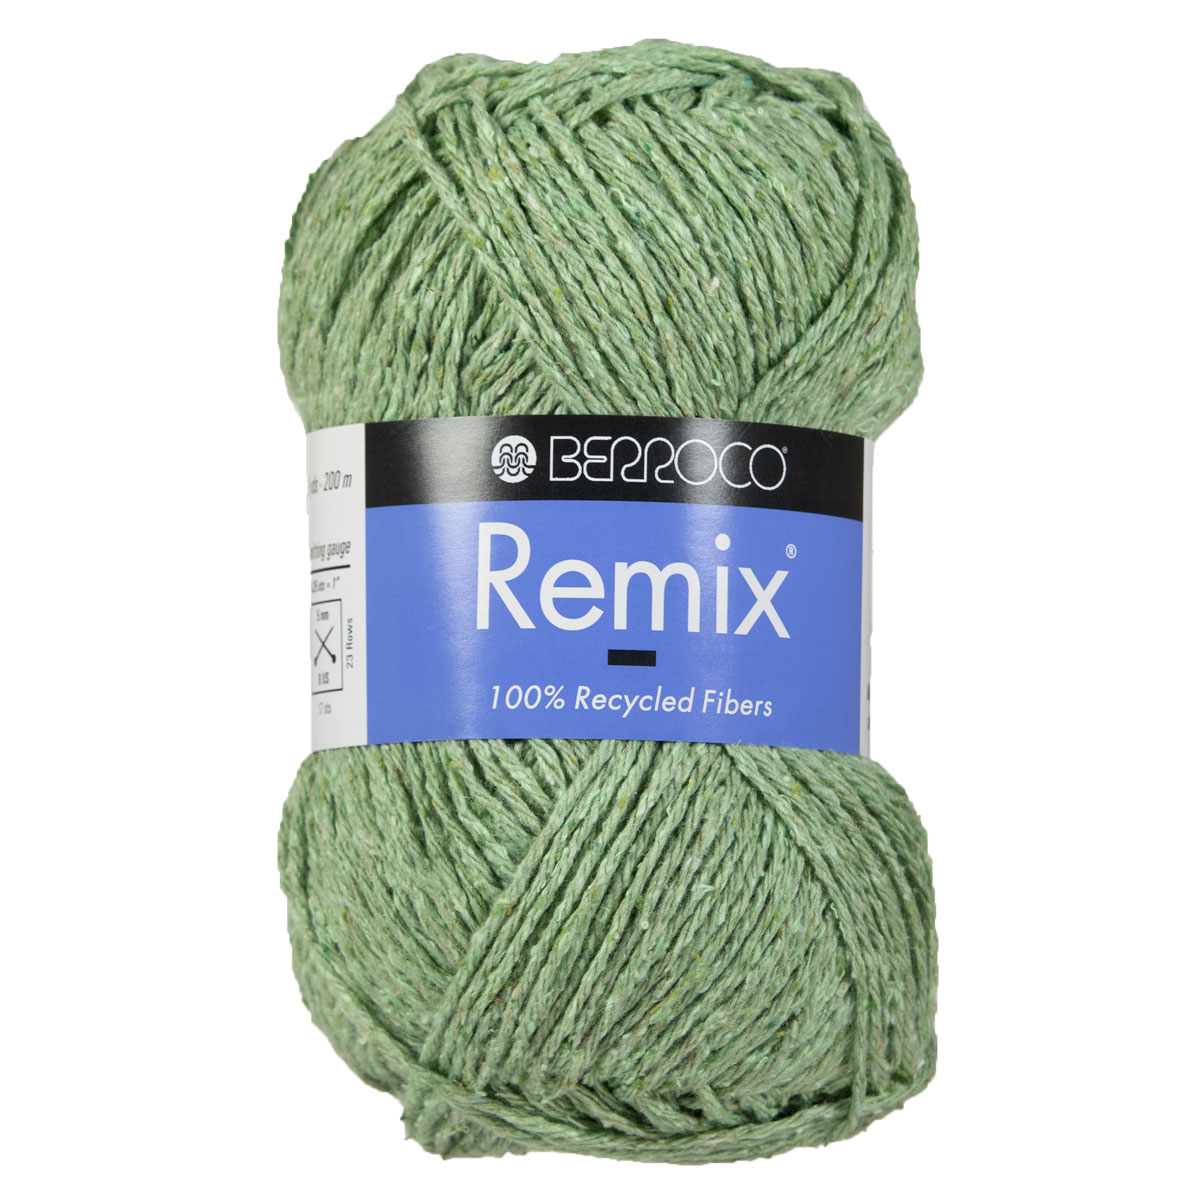 Berroco Remix Yarn - 3962 New Leaf at Jimmy Beans Wool